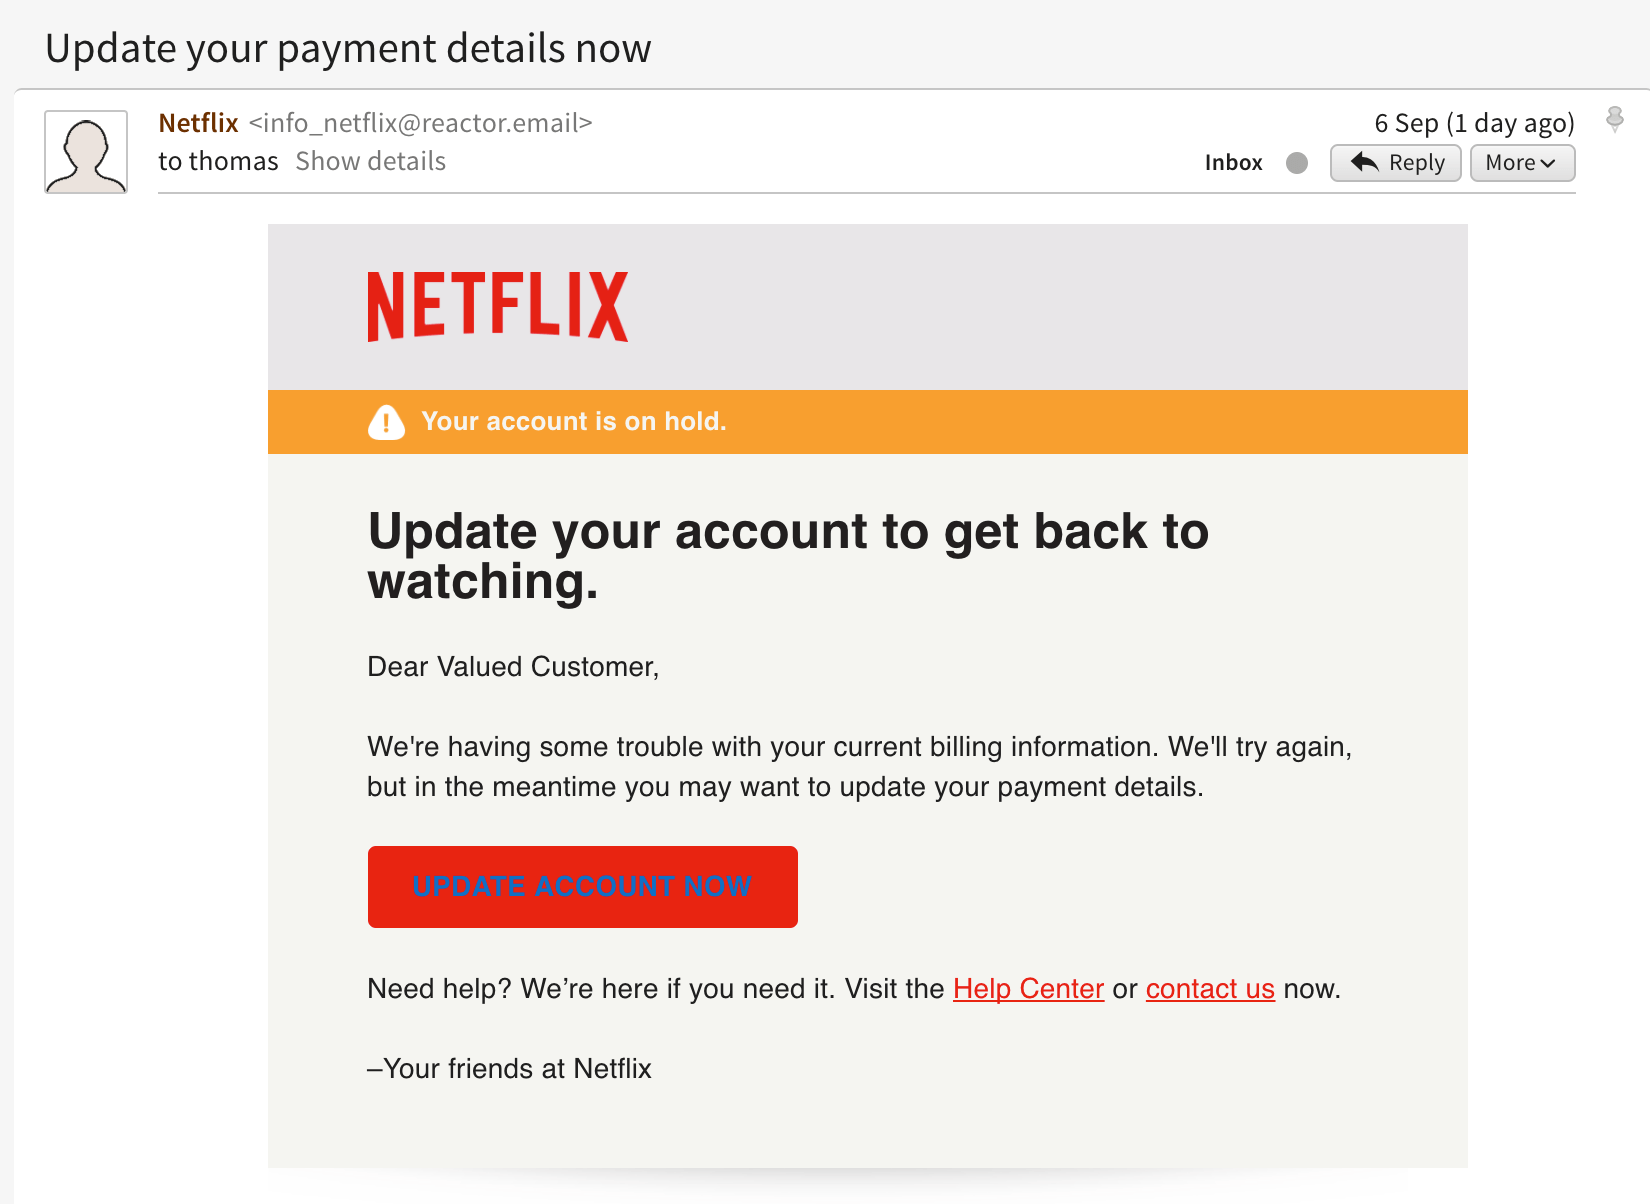 RE: My Netflix Account